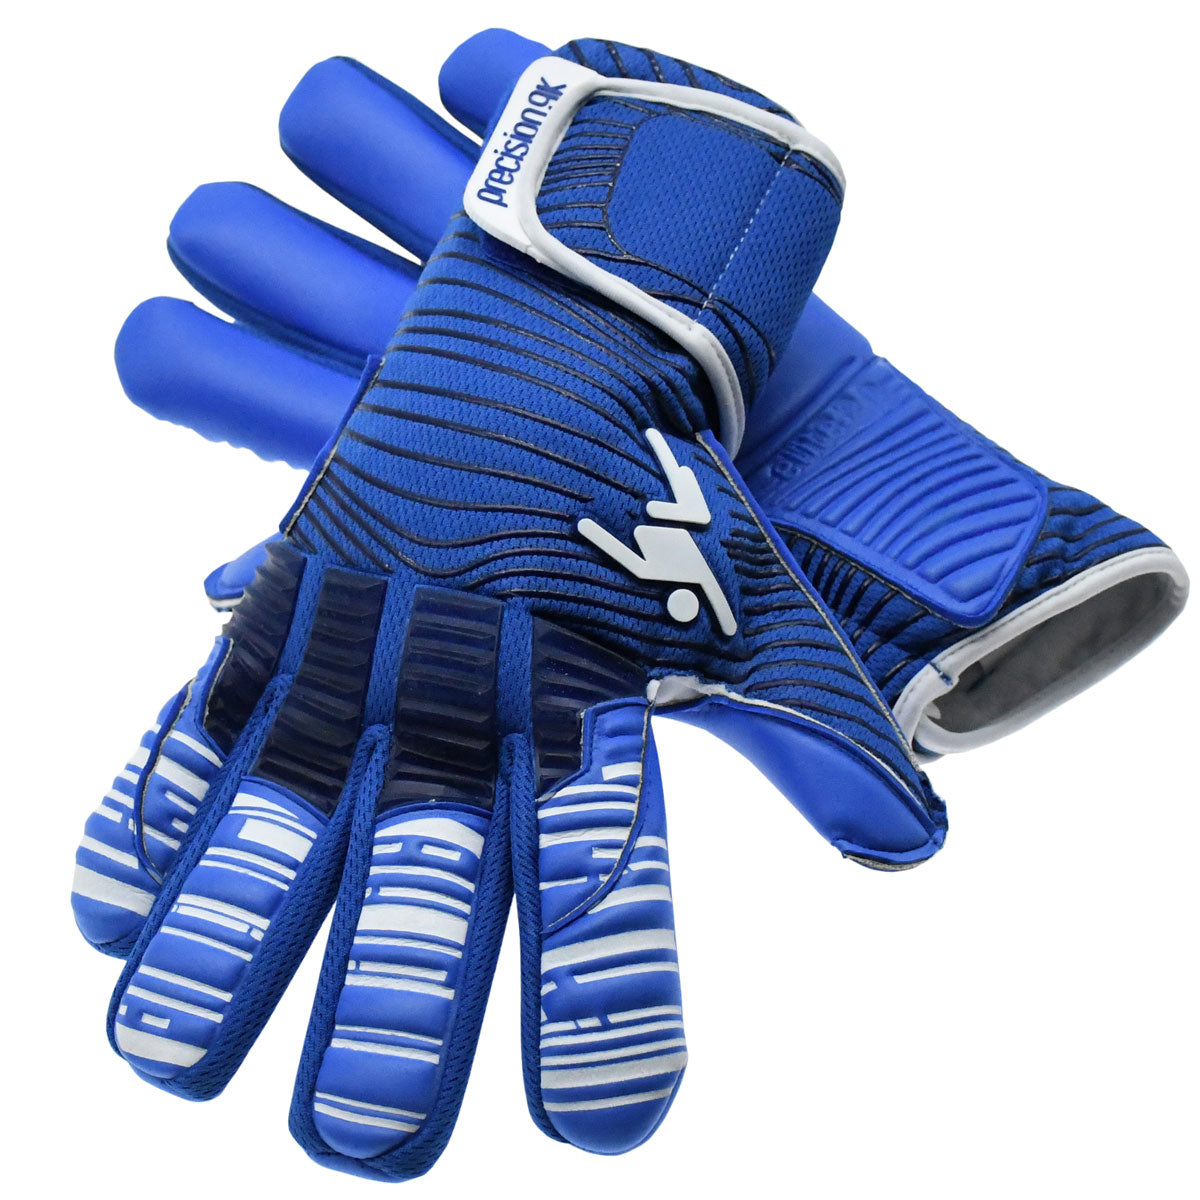 Precision Training Elite 2.0 Grip Goal Keeper Gloves - Adult